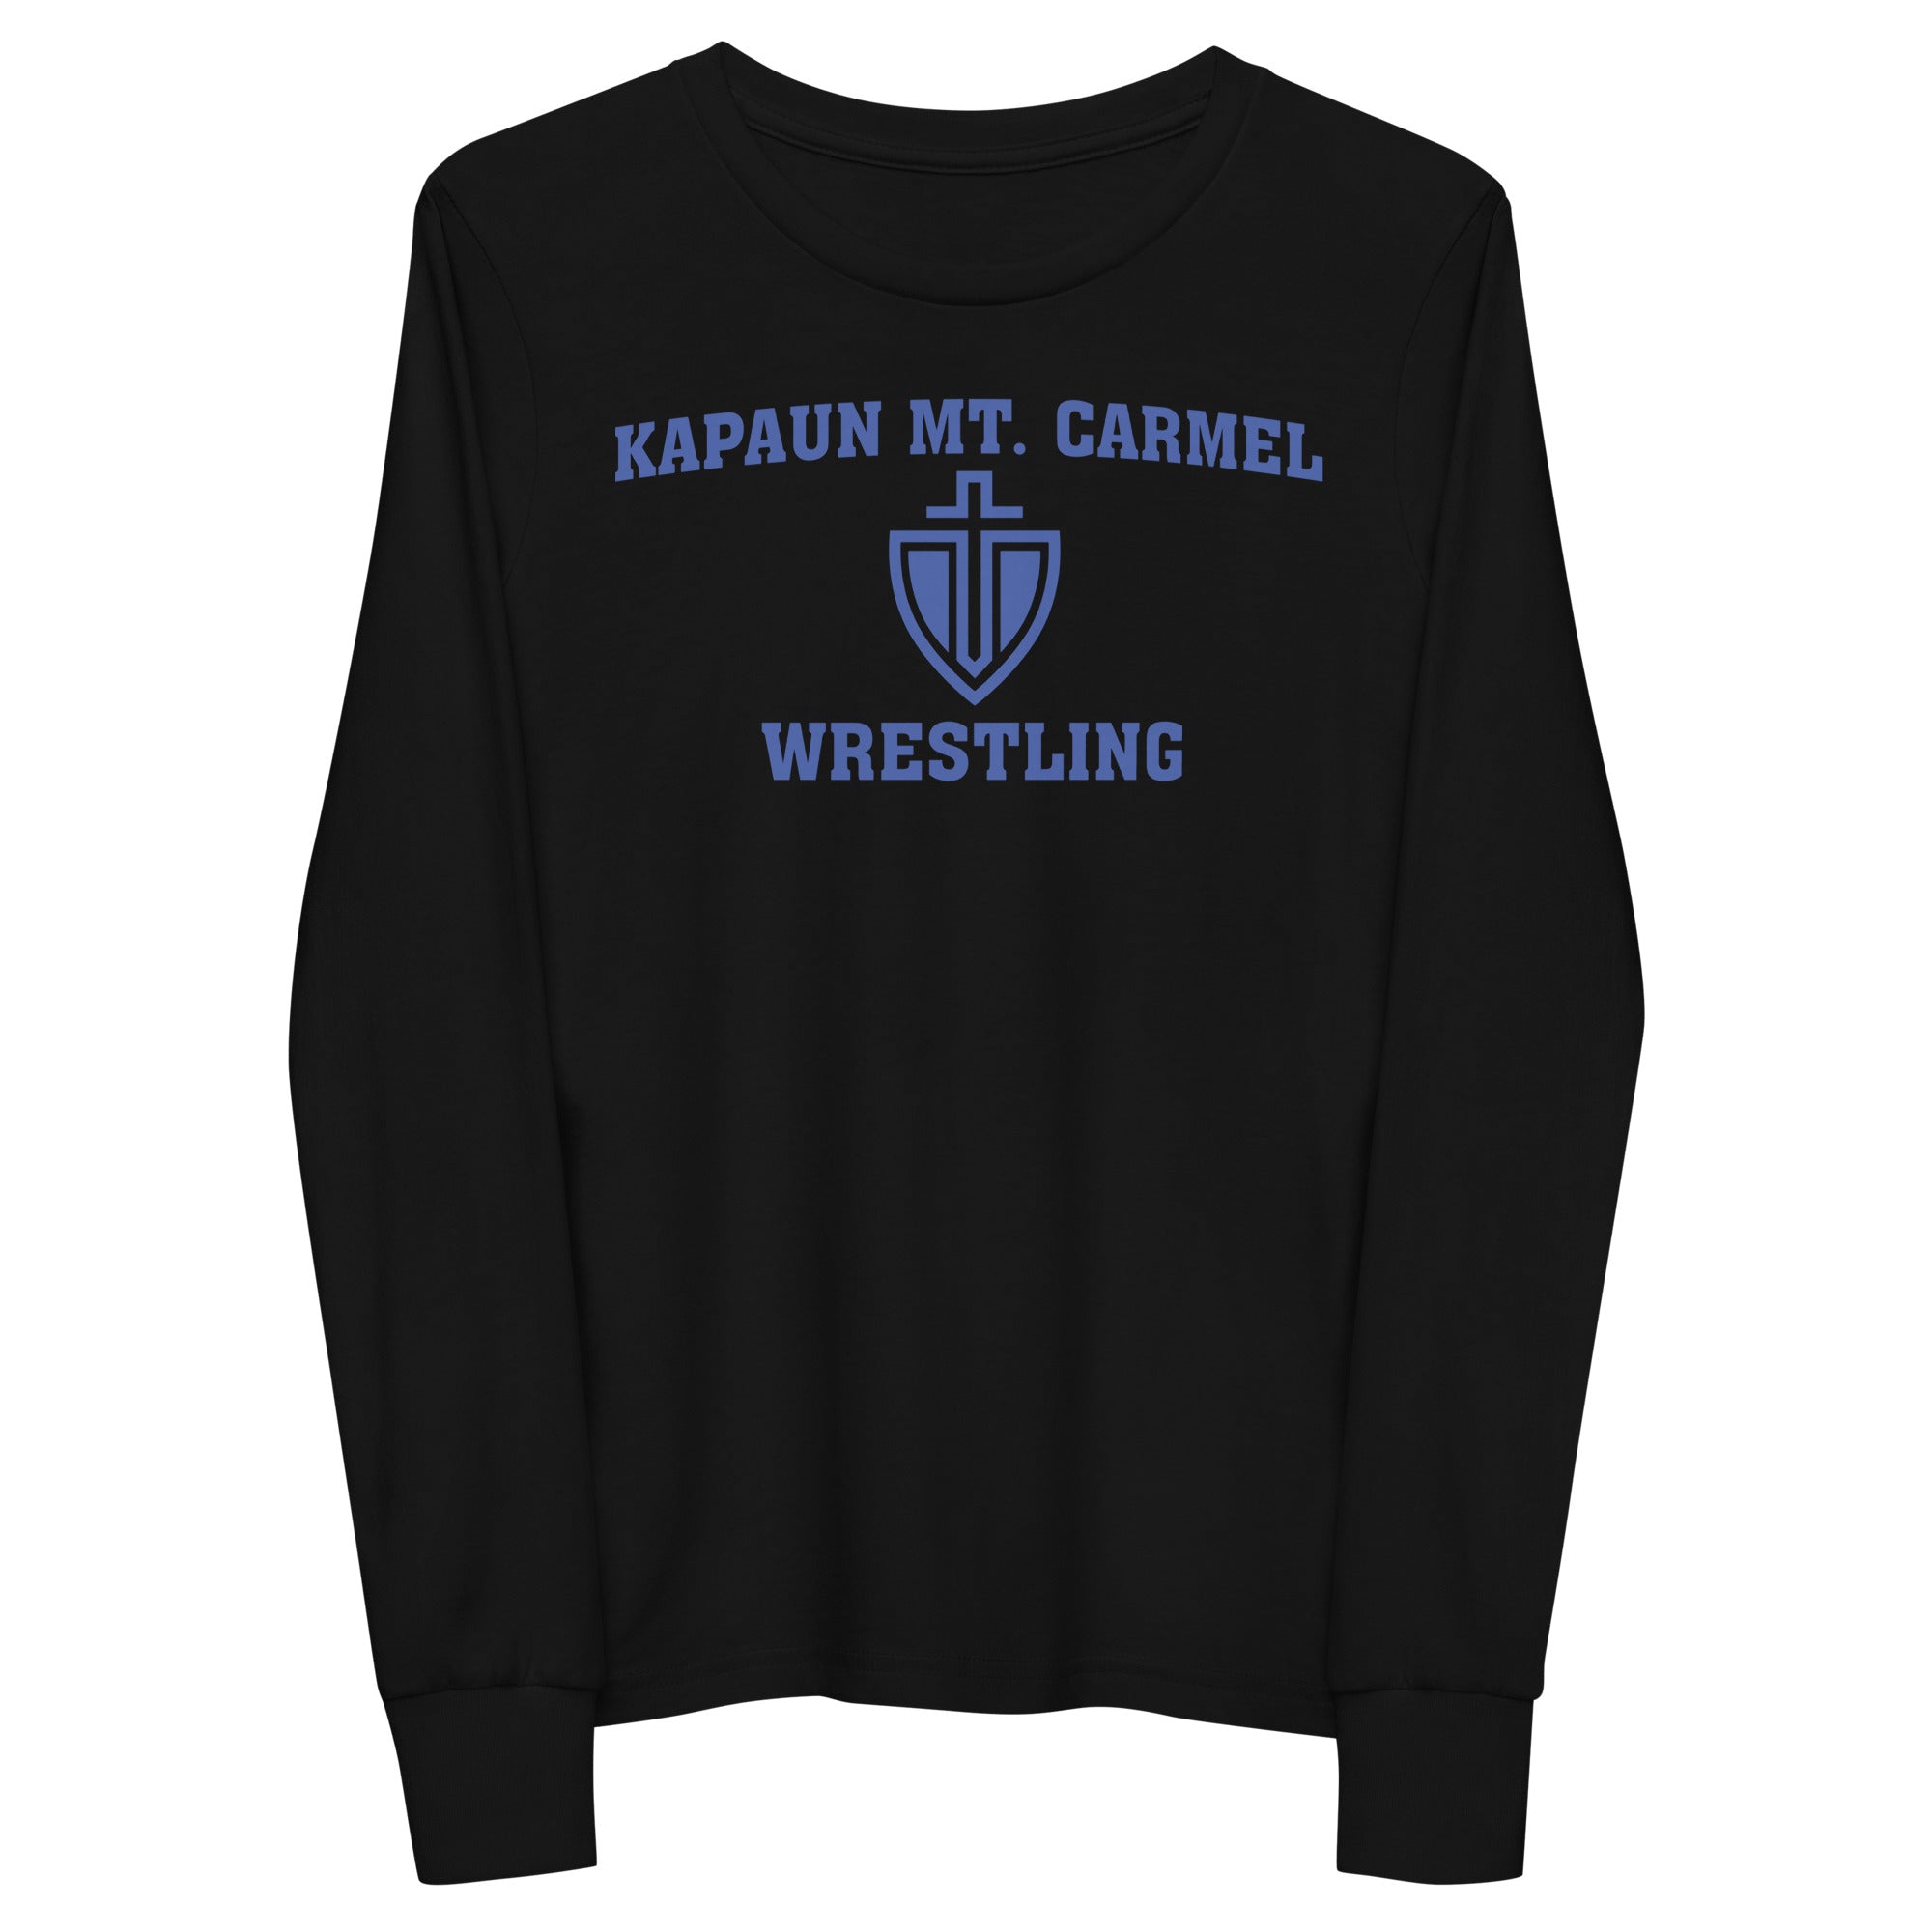 Kapaun Mt. Carmel Wrestling Black/Grey/White Youth Long Sleeve Tee